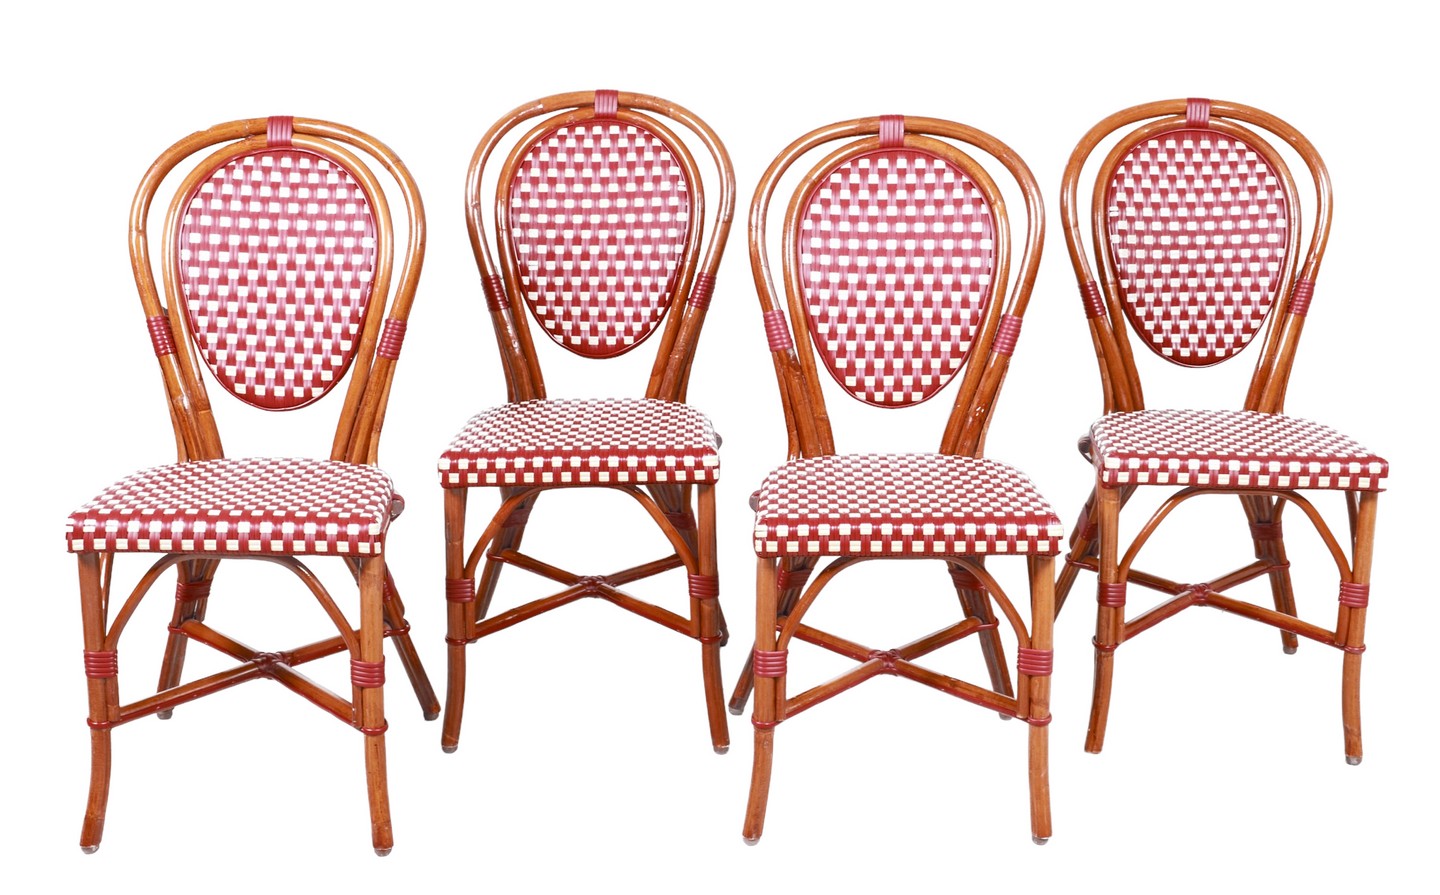  4 Poitoux Glac Seat side chairs  317e32